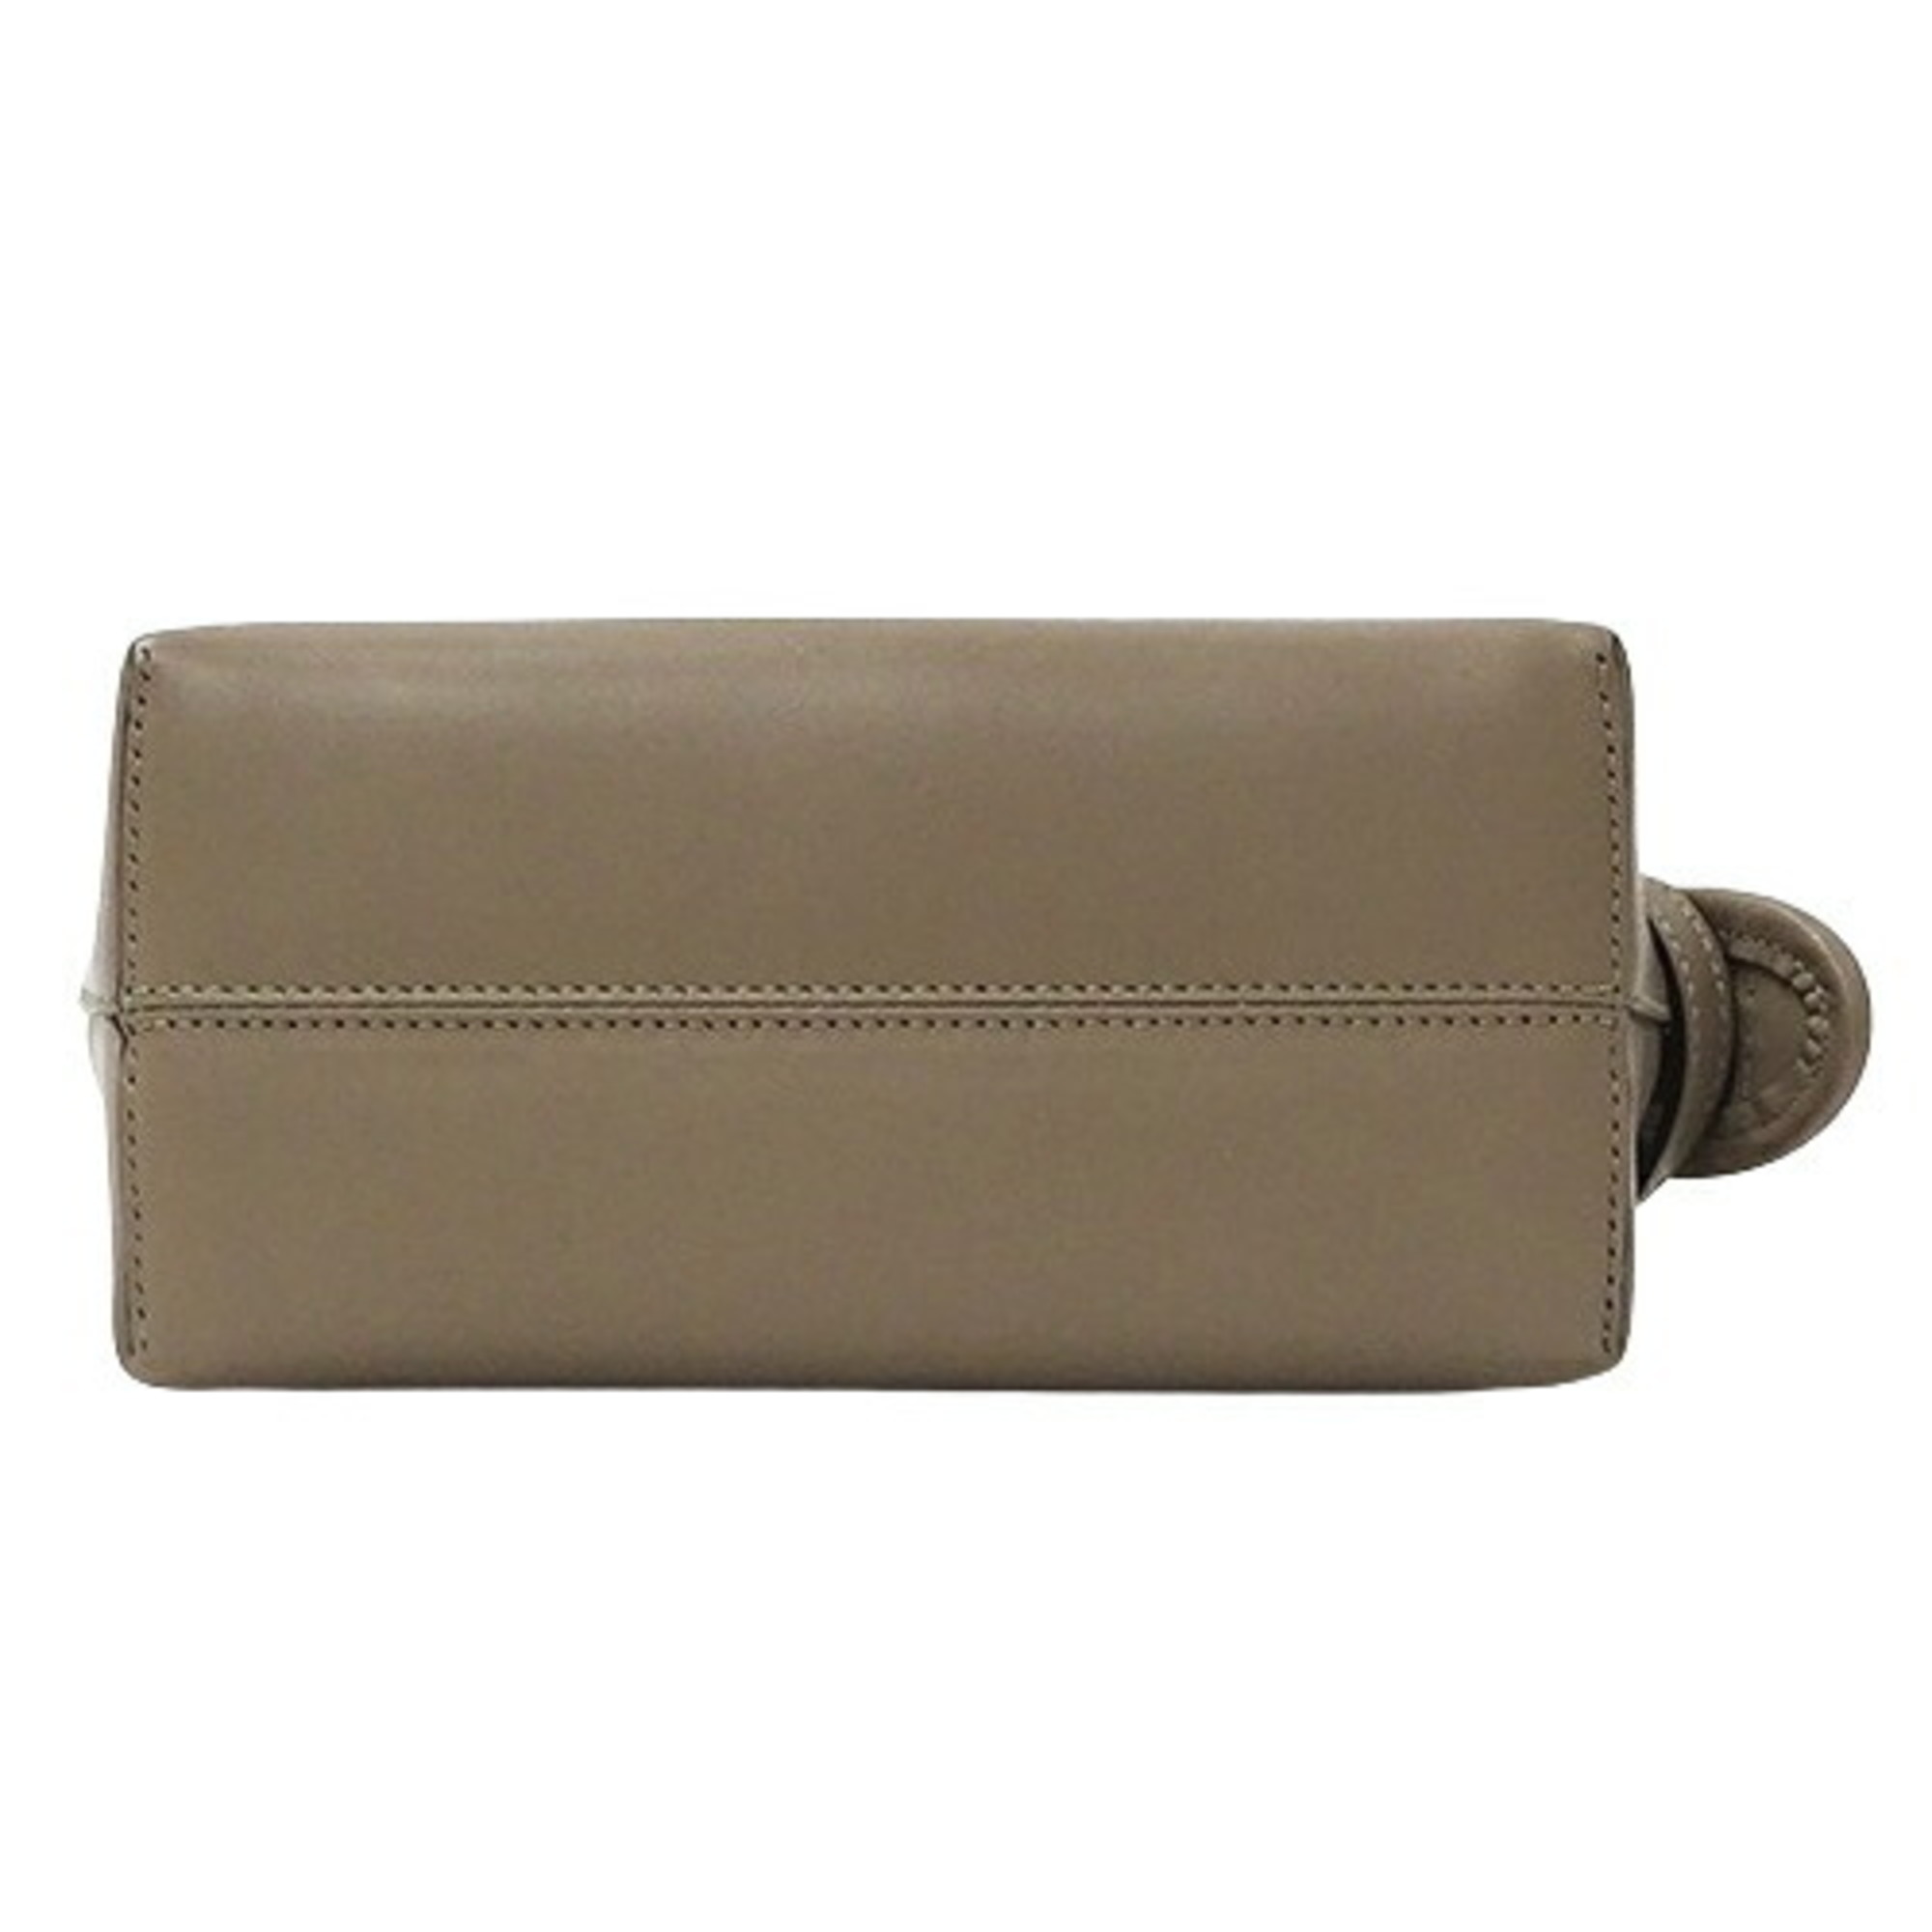 FENDI Bag Women's Handbag Shoulder 2way Leather By the Way Greige 8BS067 Beige Compact Micro